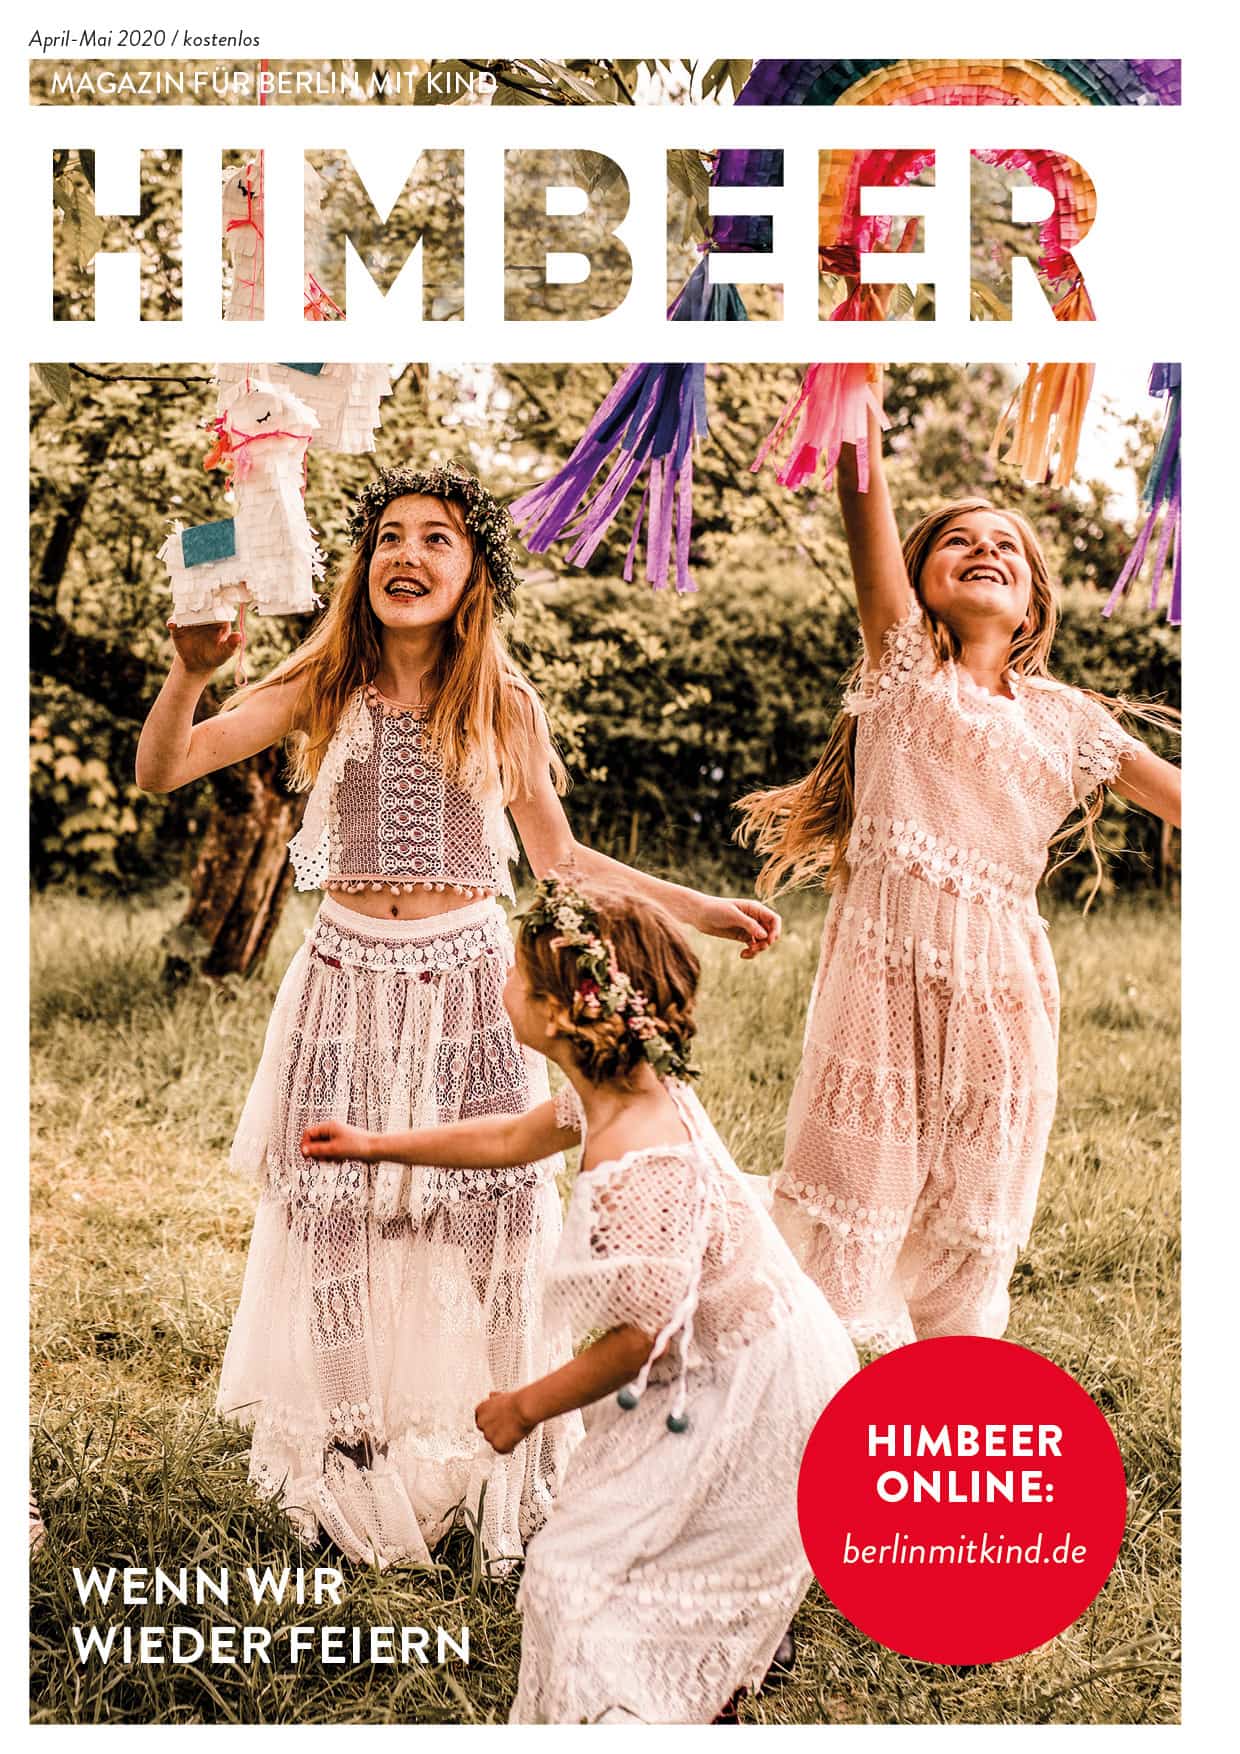 HIMBEER Magazin für Berlin mit Kind April-Mai 2020 // HIMBEER